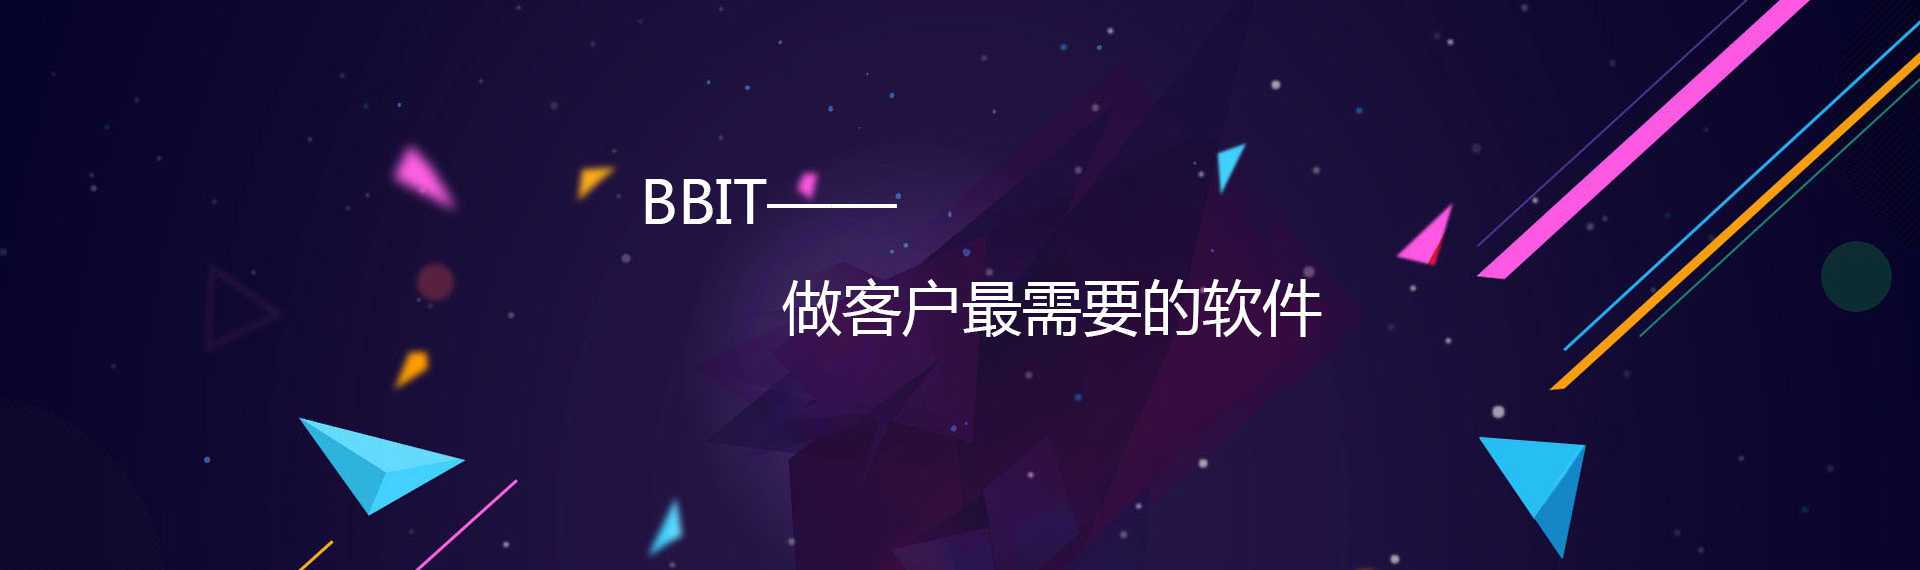 BBIT——做客户最需要的软件